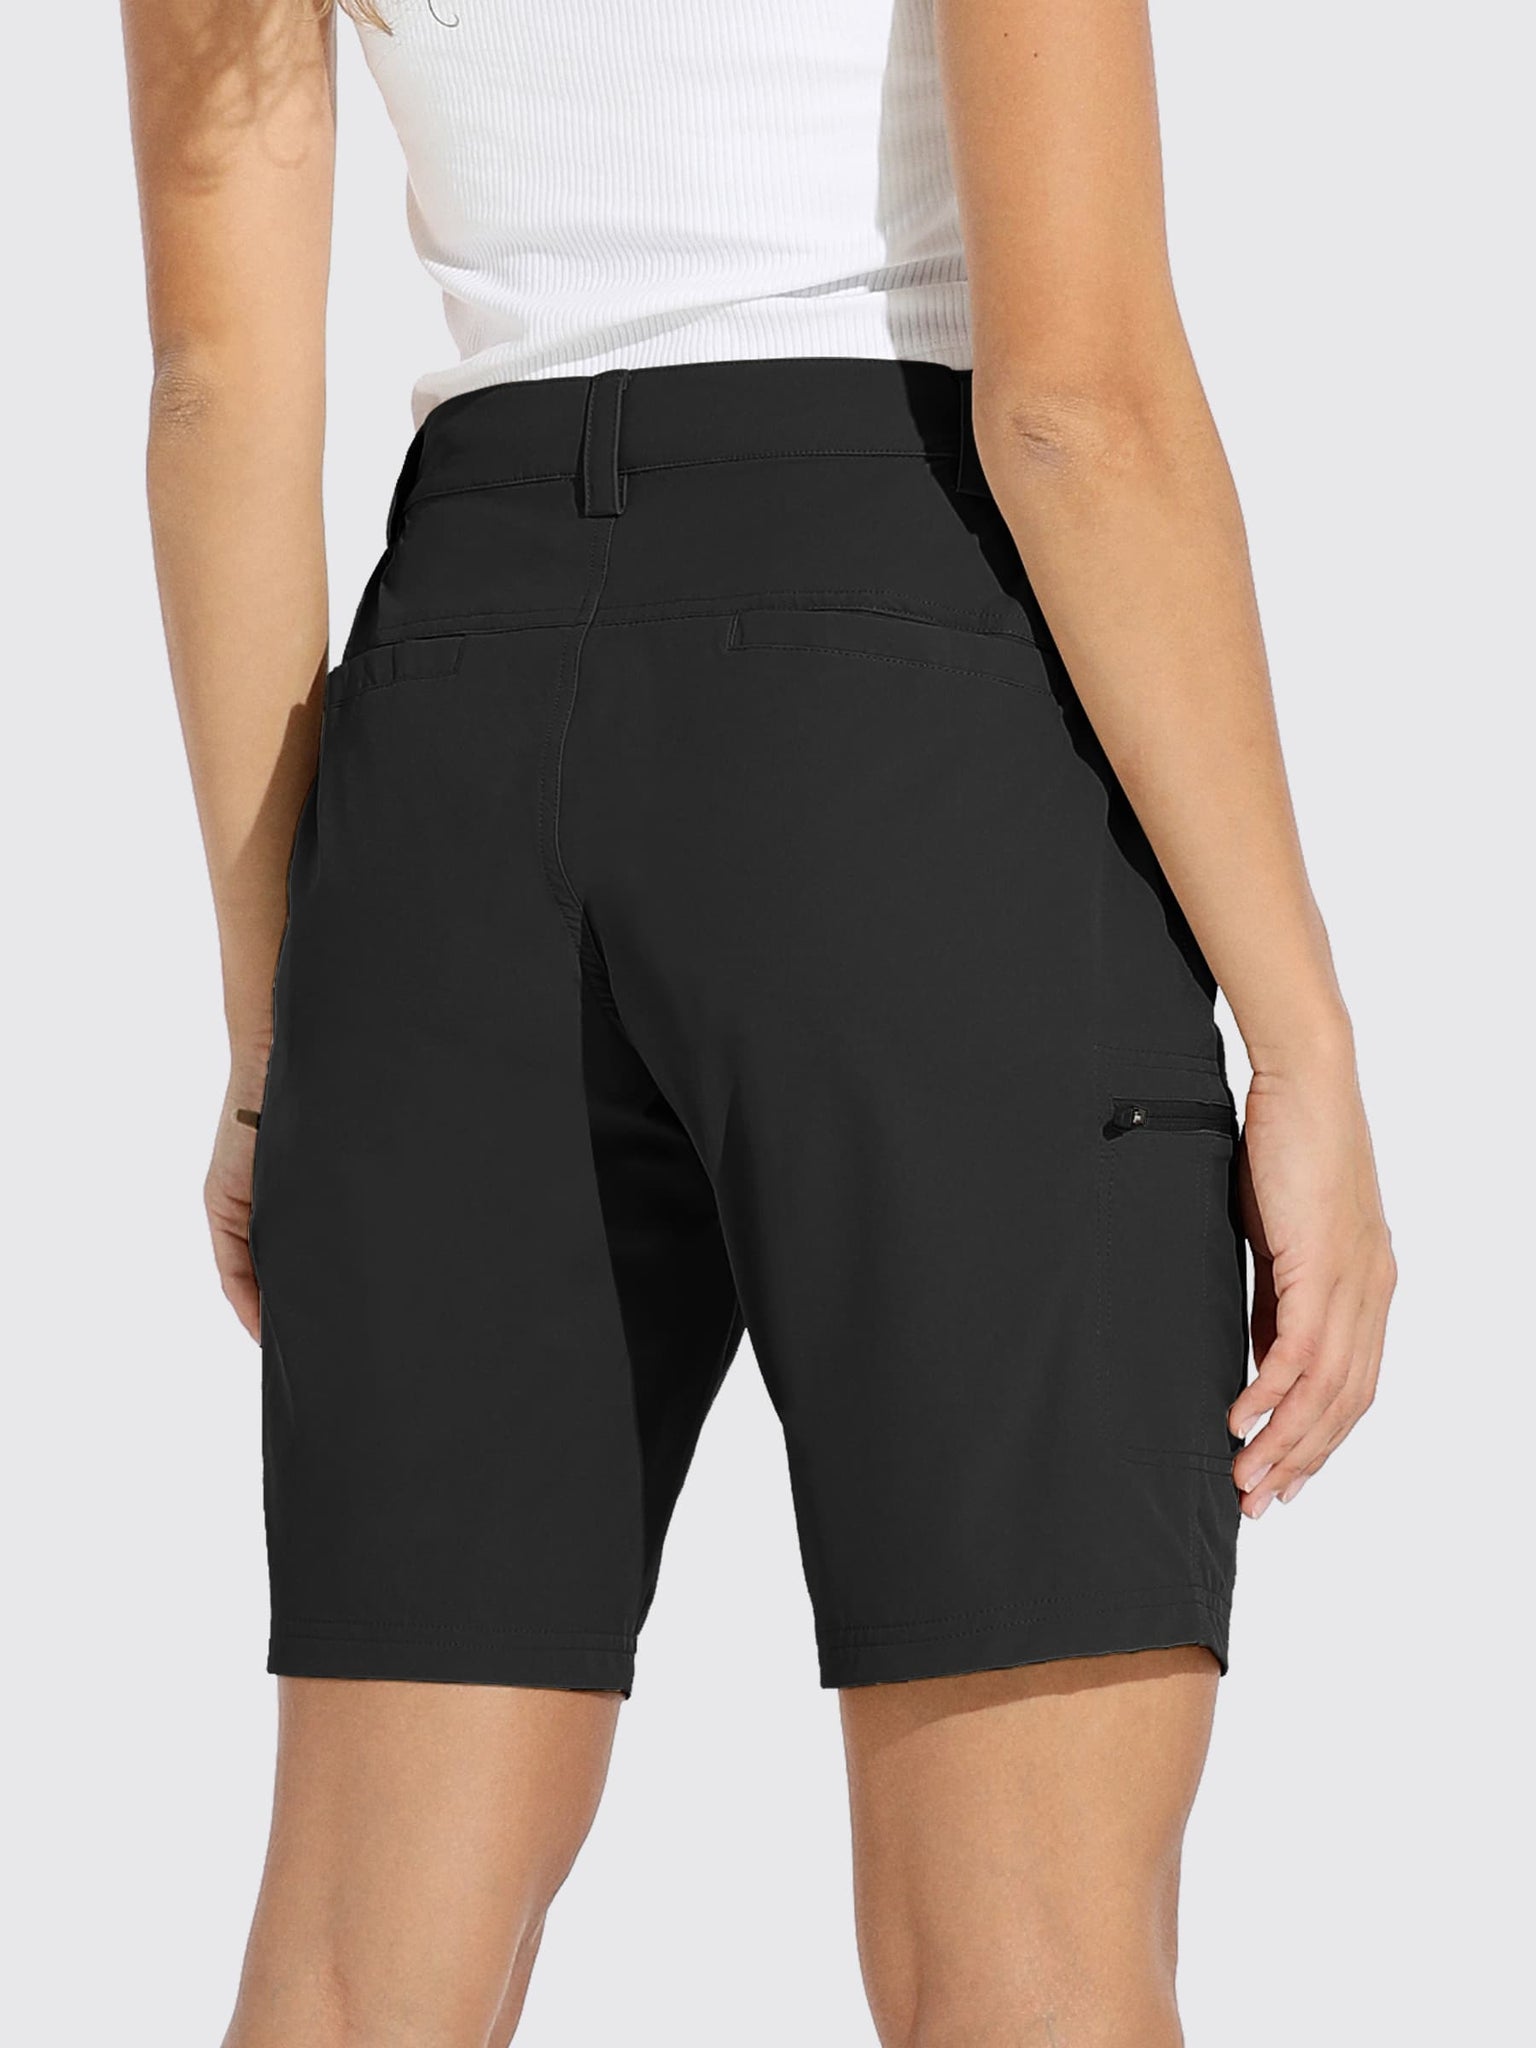 Women's Outdoor Cargo Shorts 10 Inseam_Black2